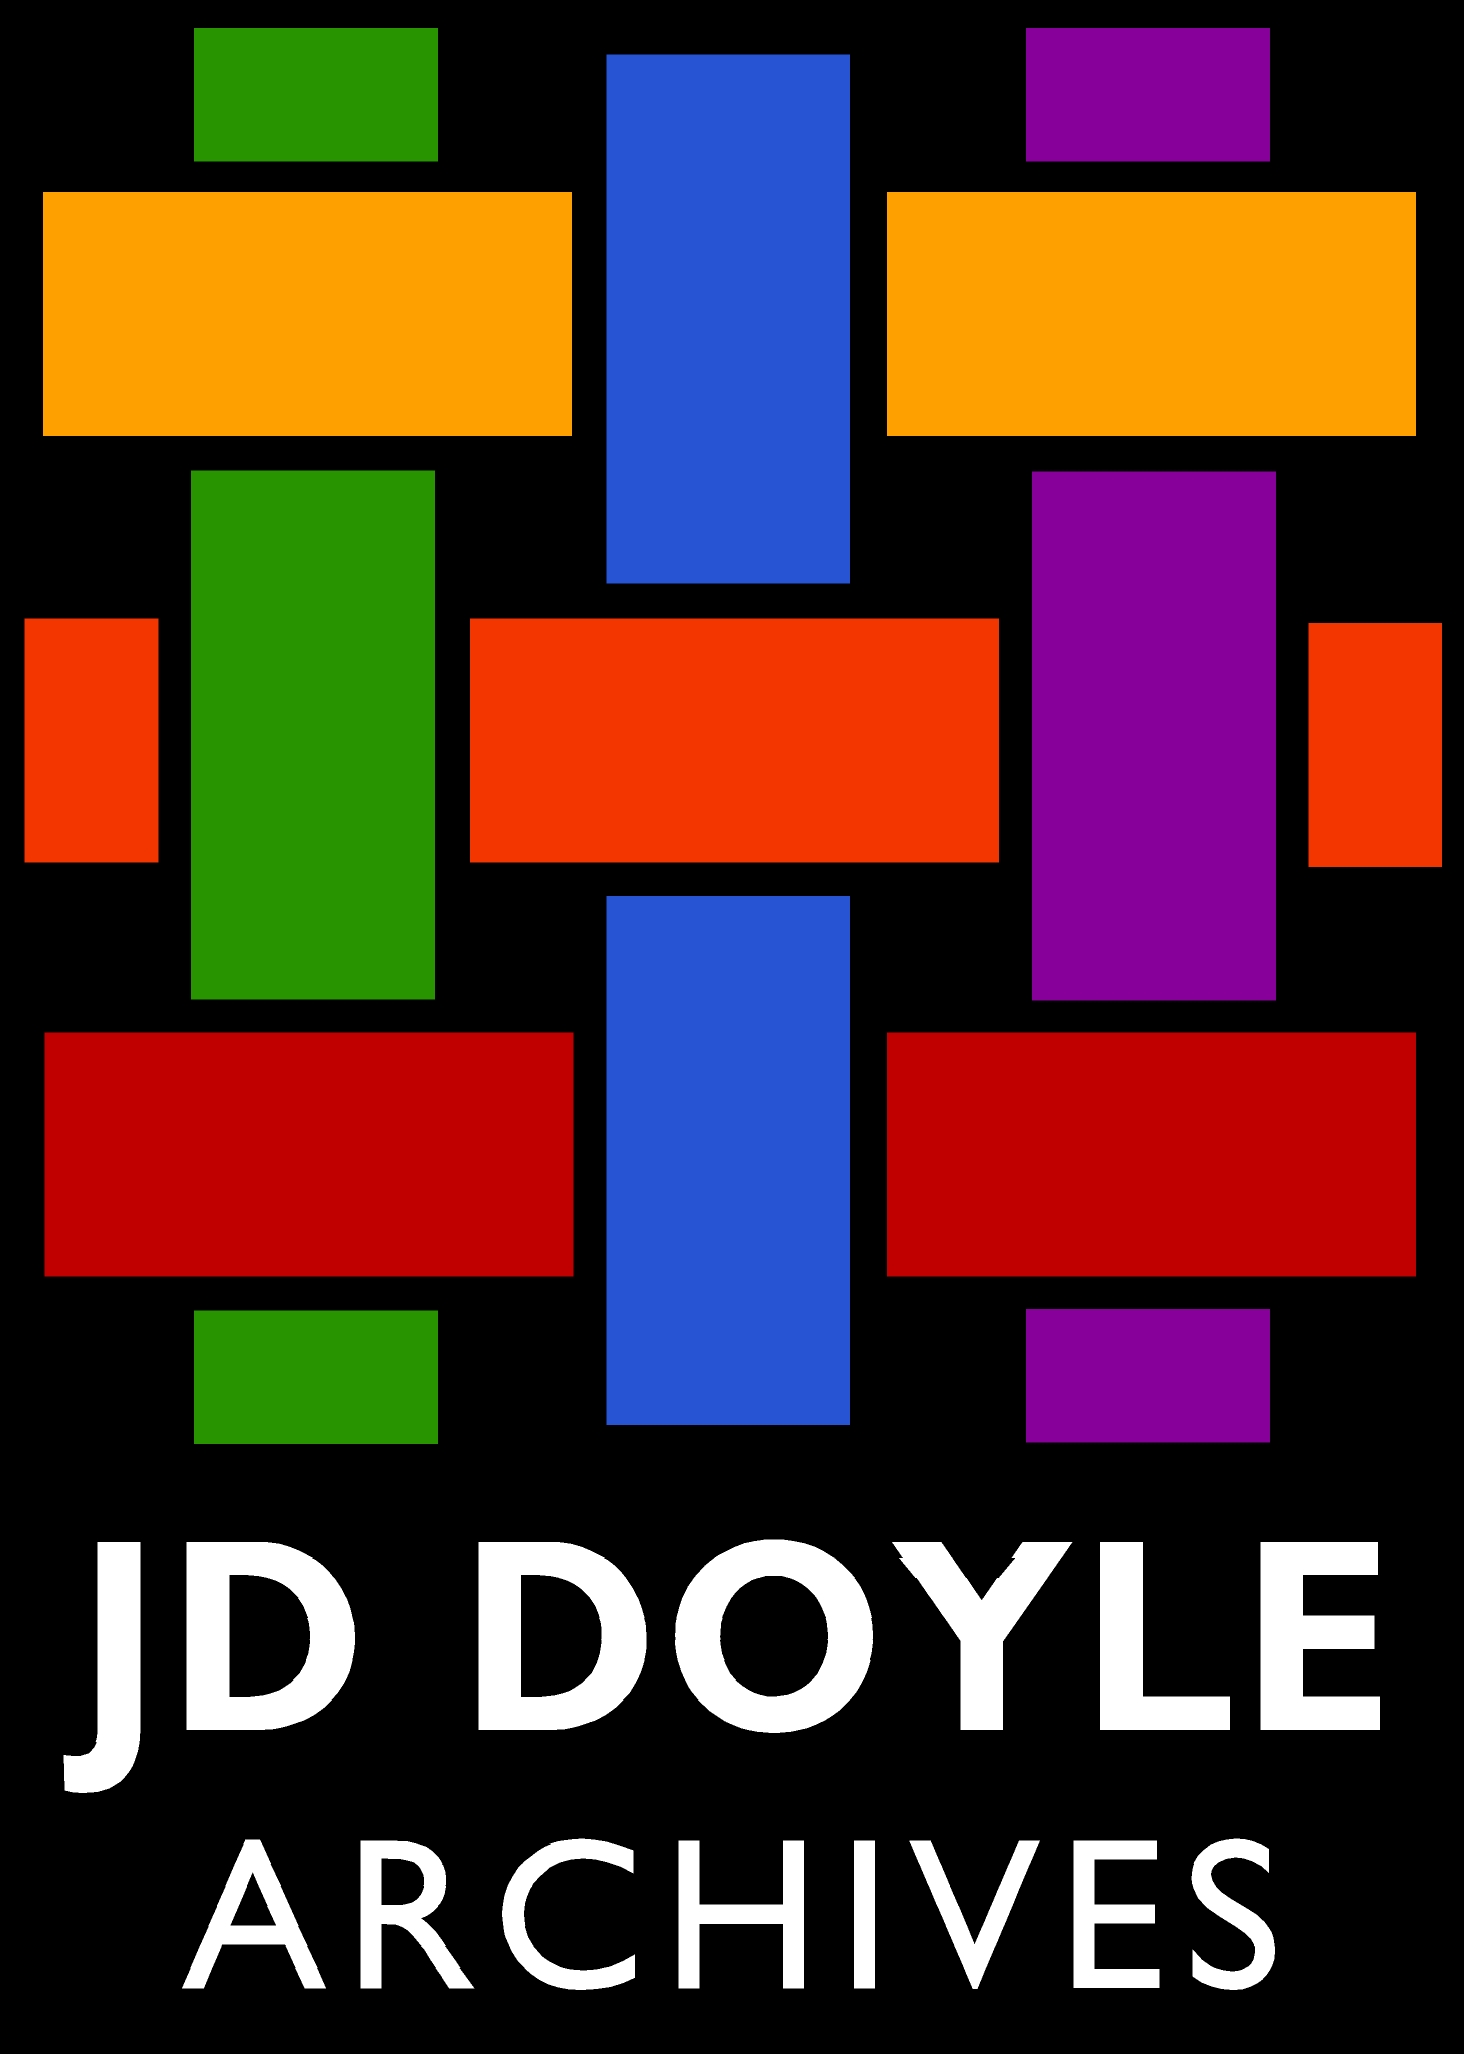 JDDoyleArchives logo